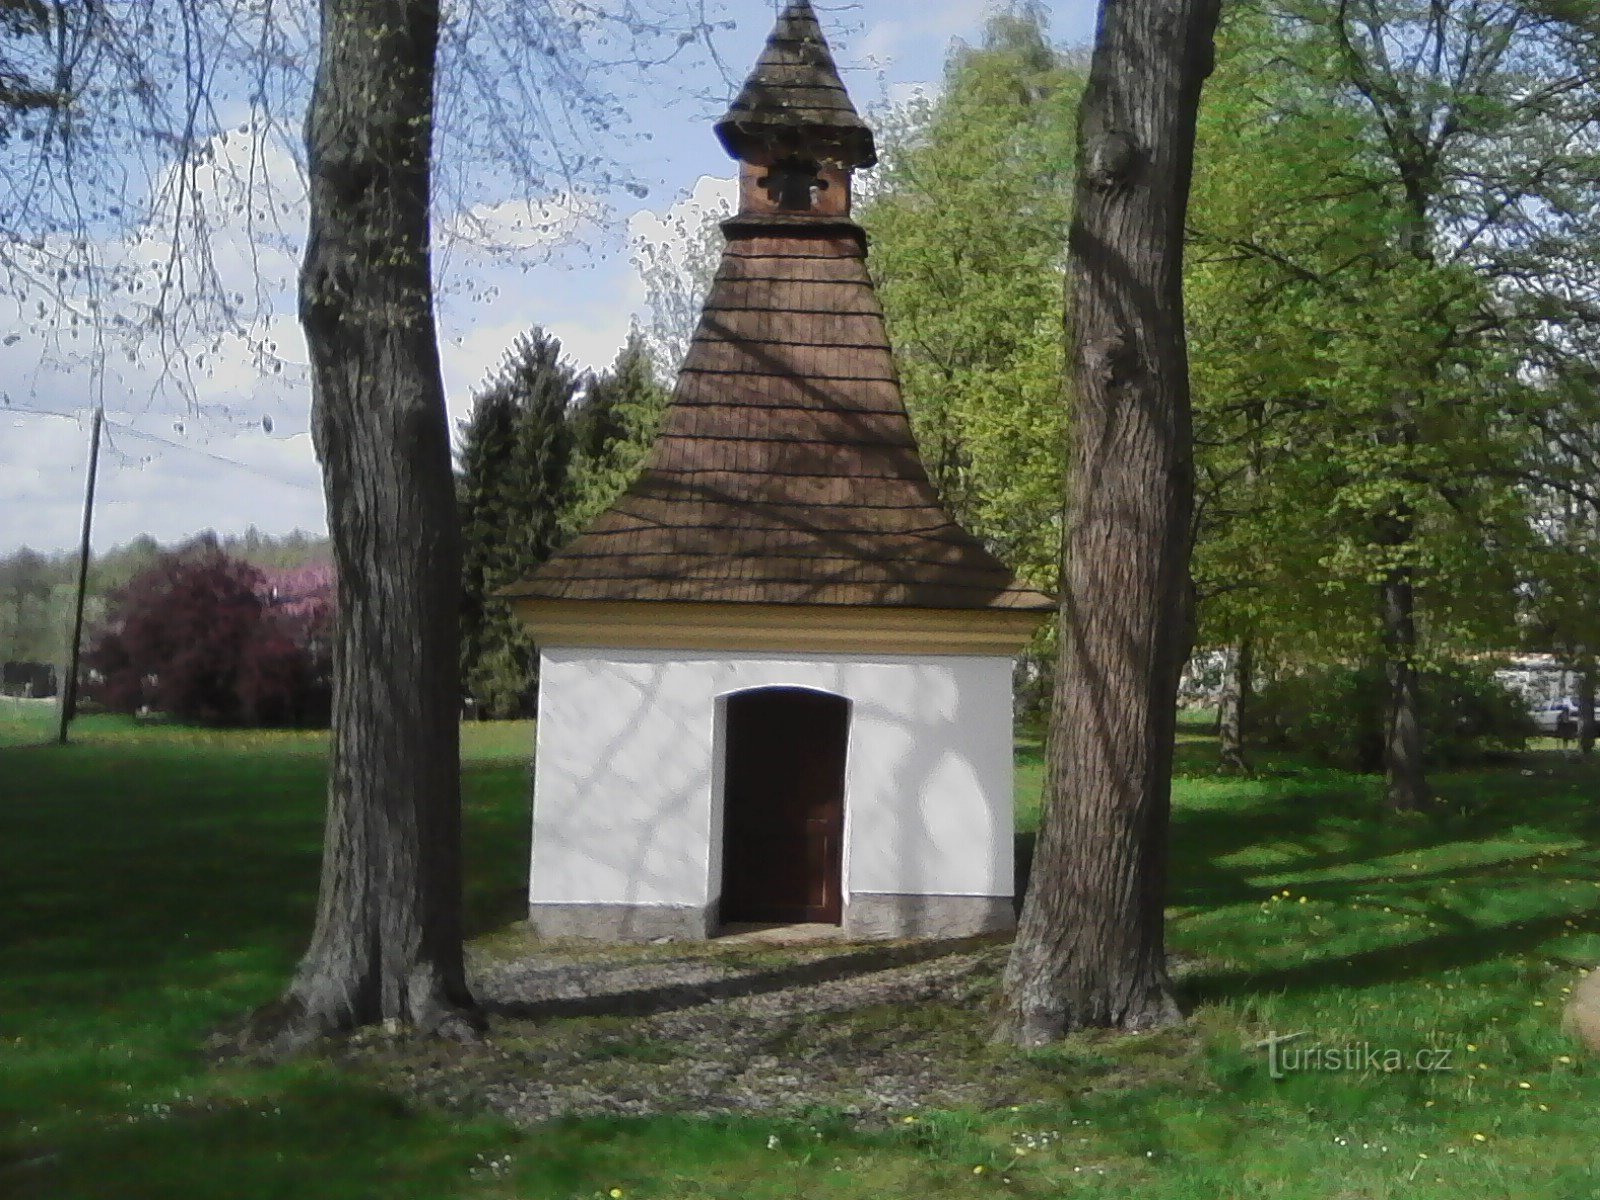 1st chapel in Leskovice, we start here.